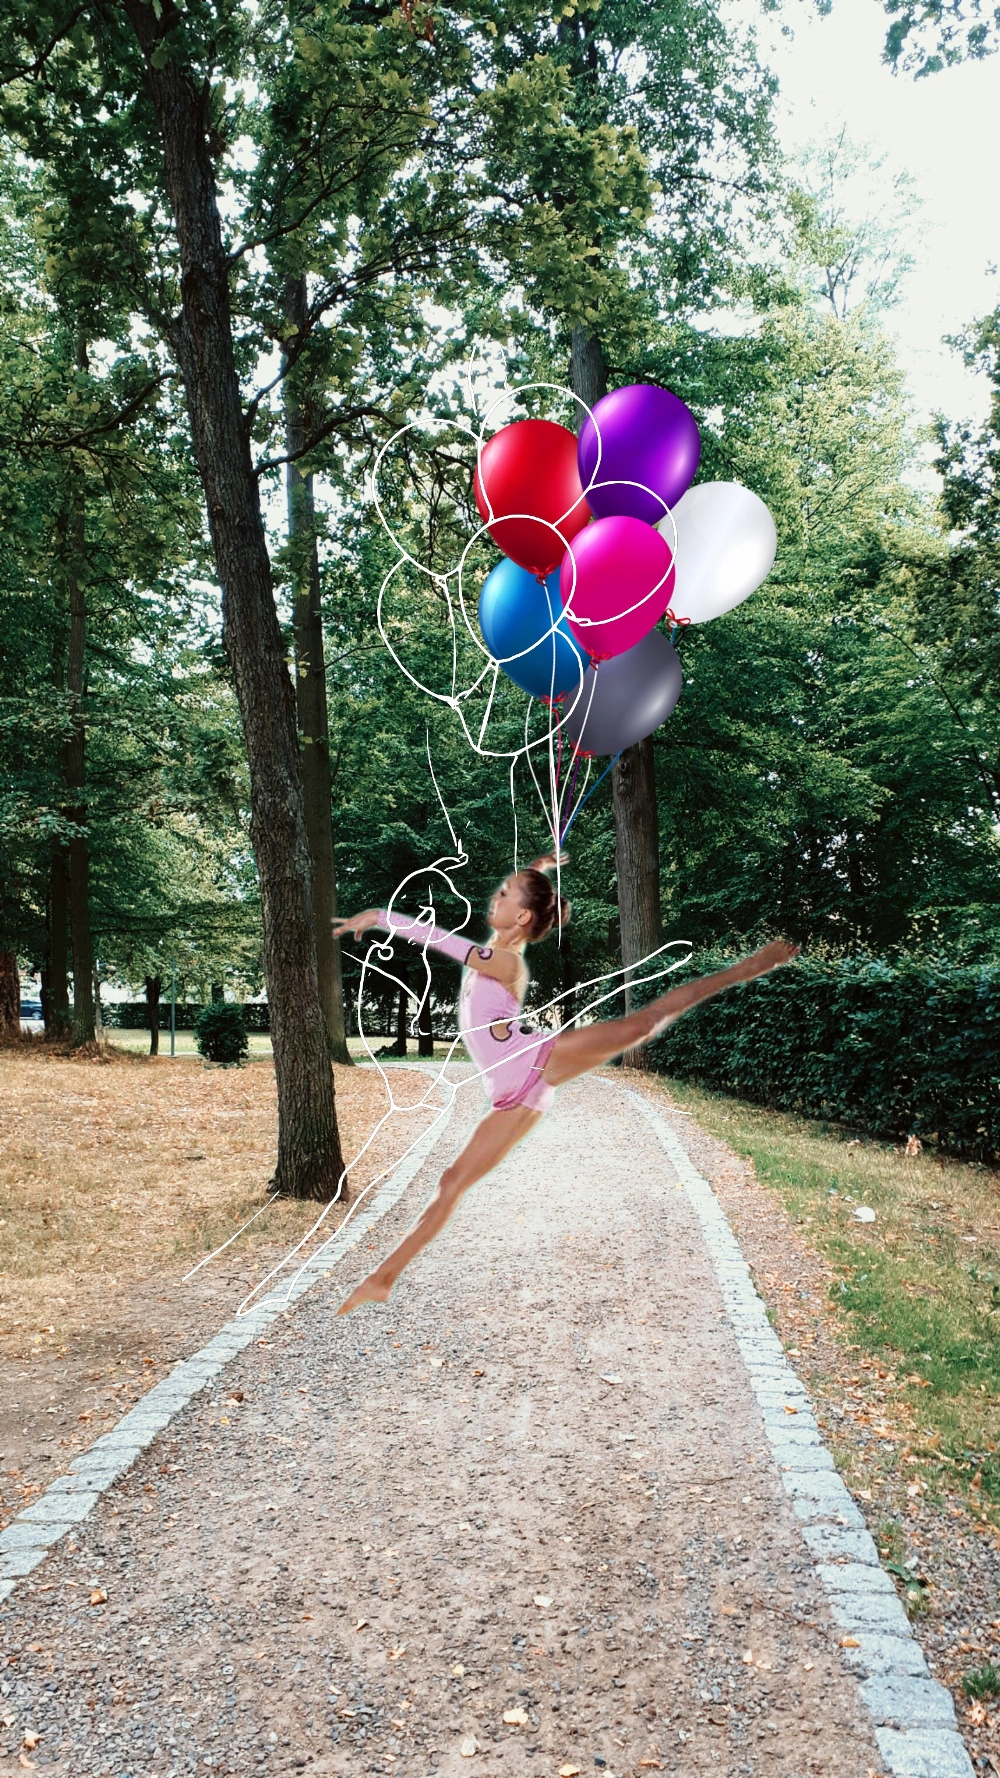 #balloon #gymnast #park #nice